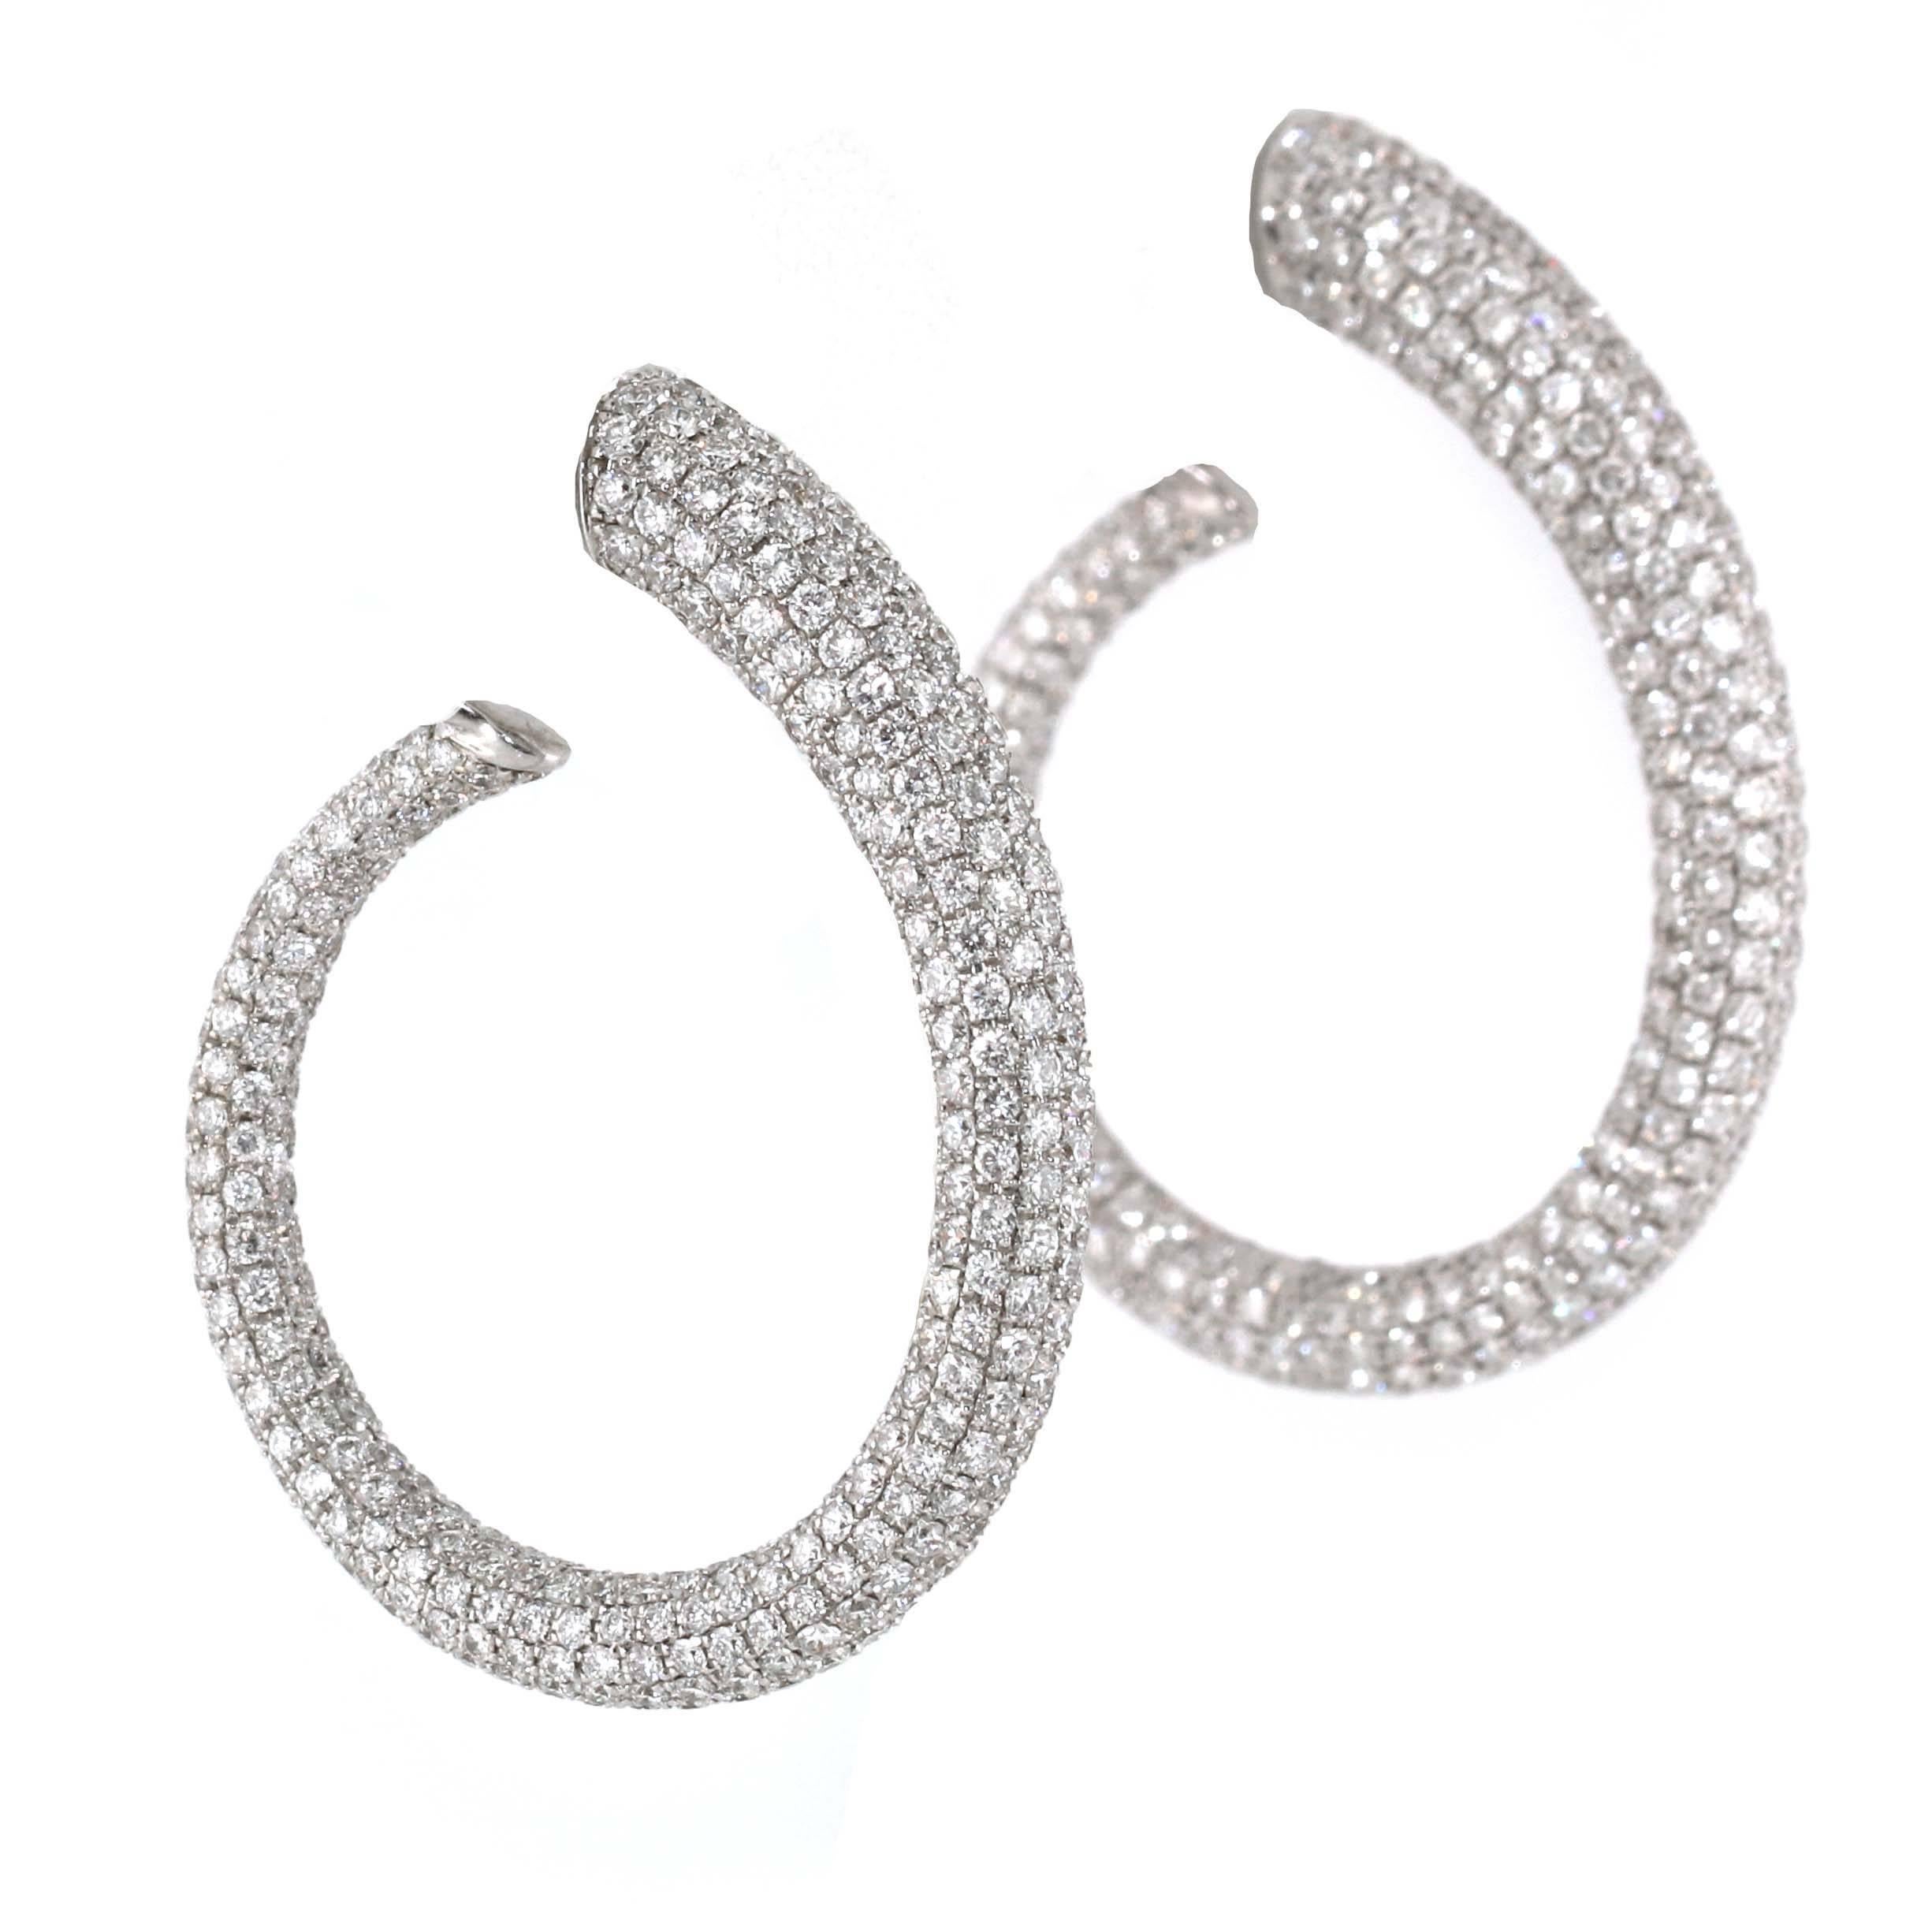 13.20 Carat White Diamond Hoops Earrings, Full Pave, Inside/Out